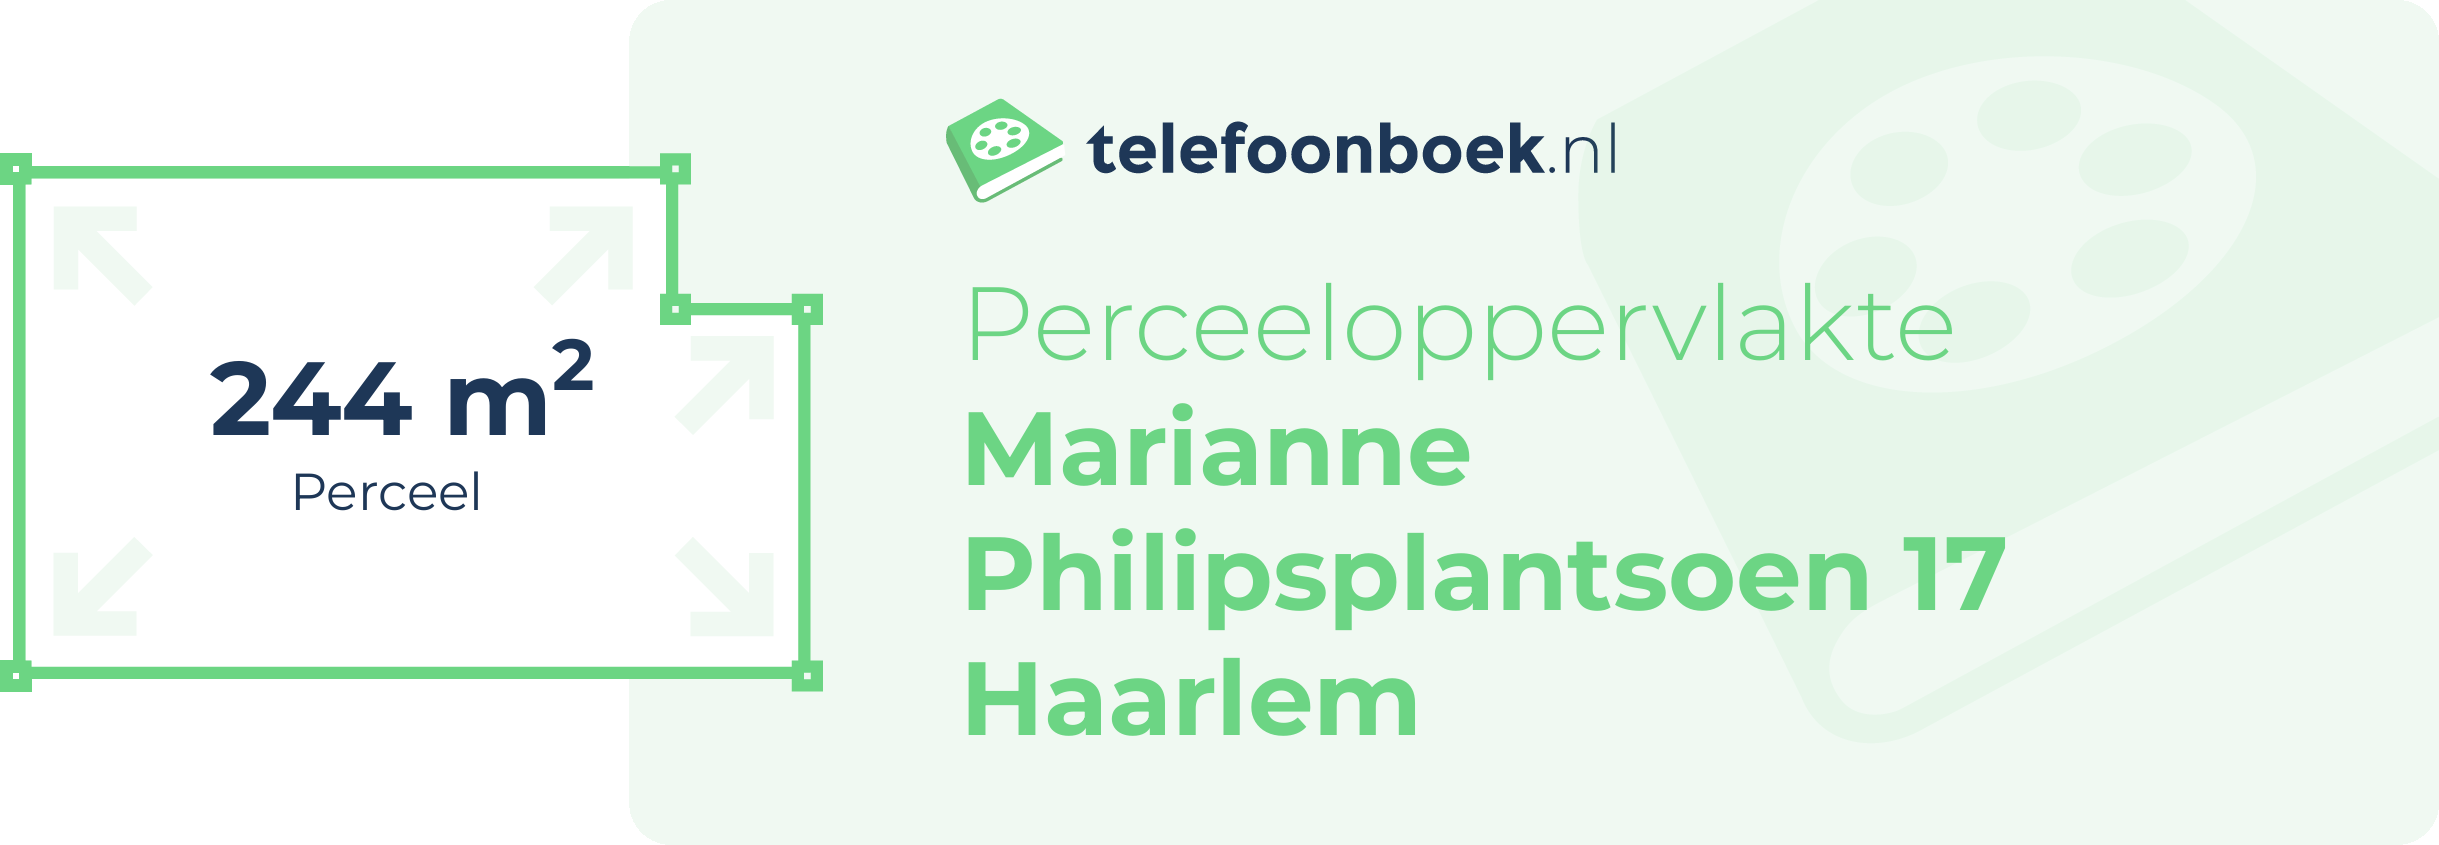 Perceeloppervlakte Marianne Philipsplantsoen 17 Haarlem